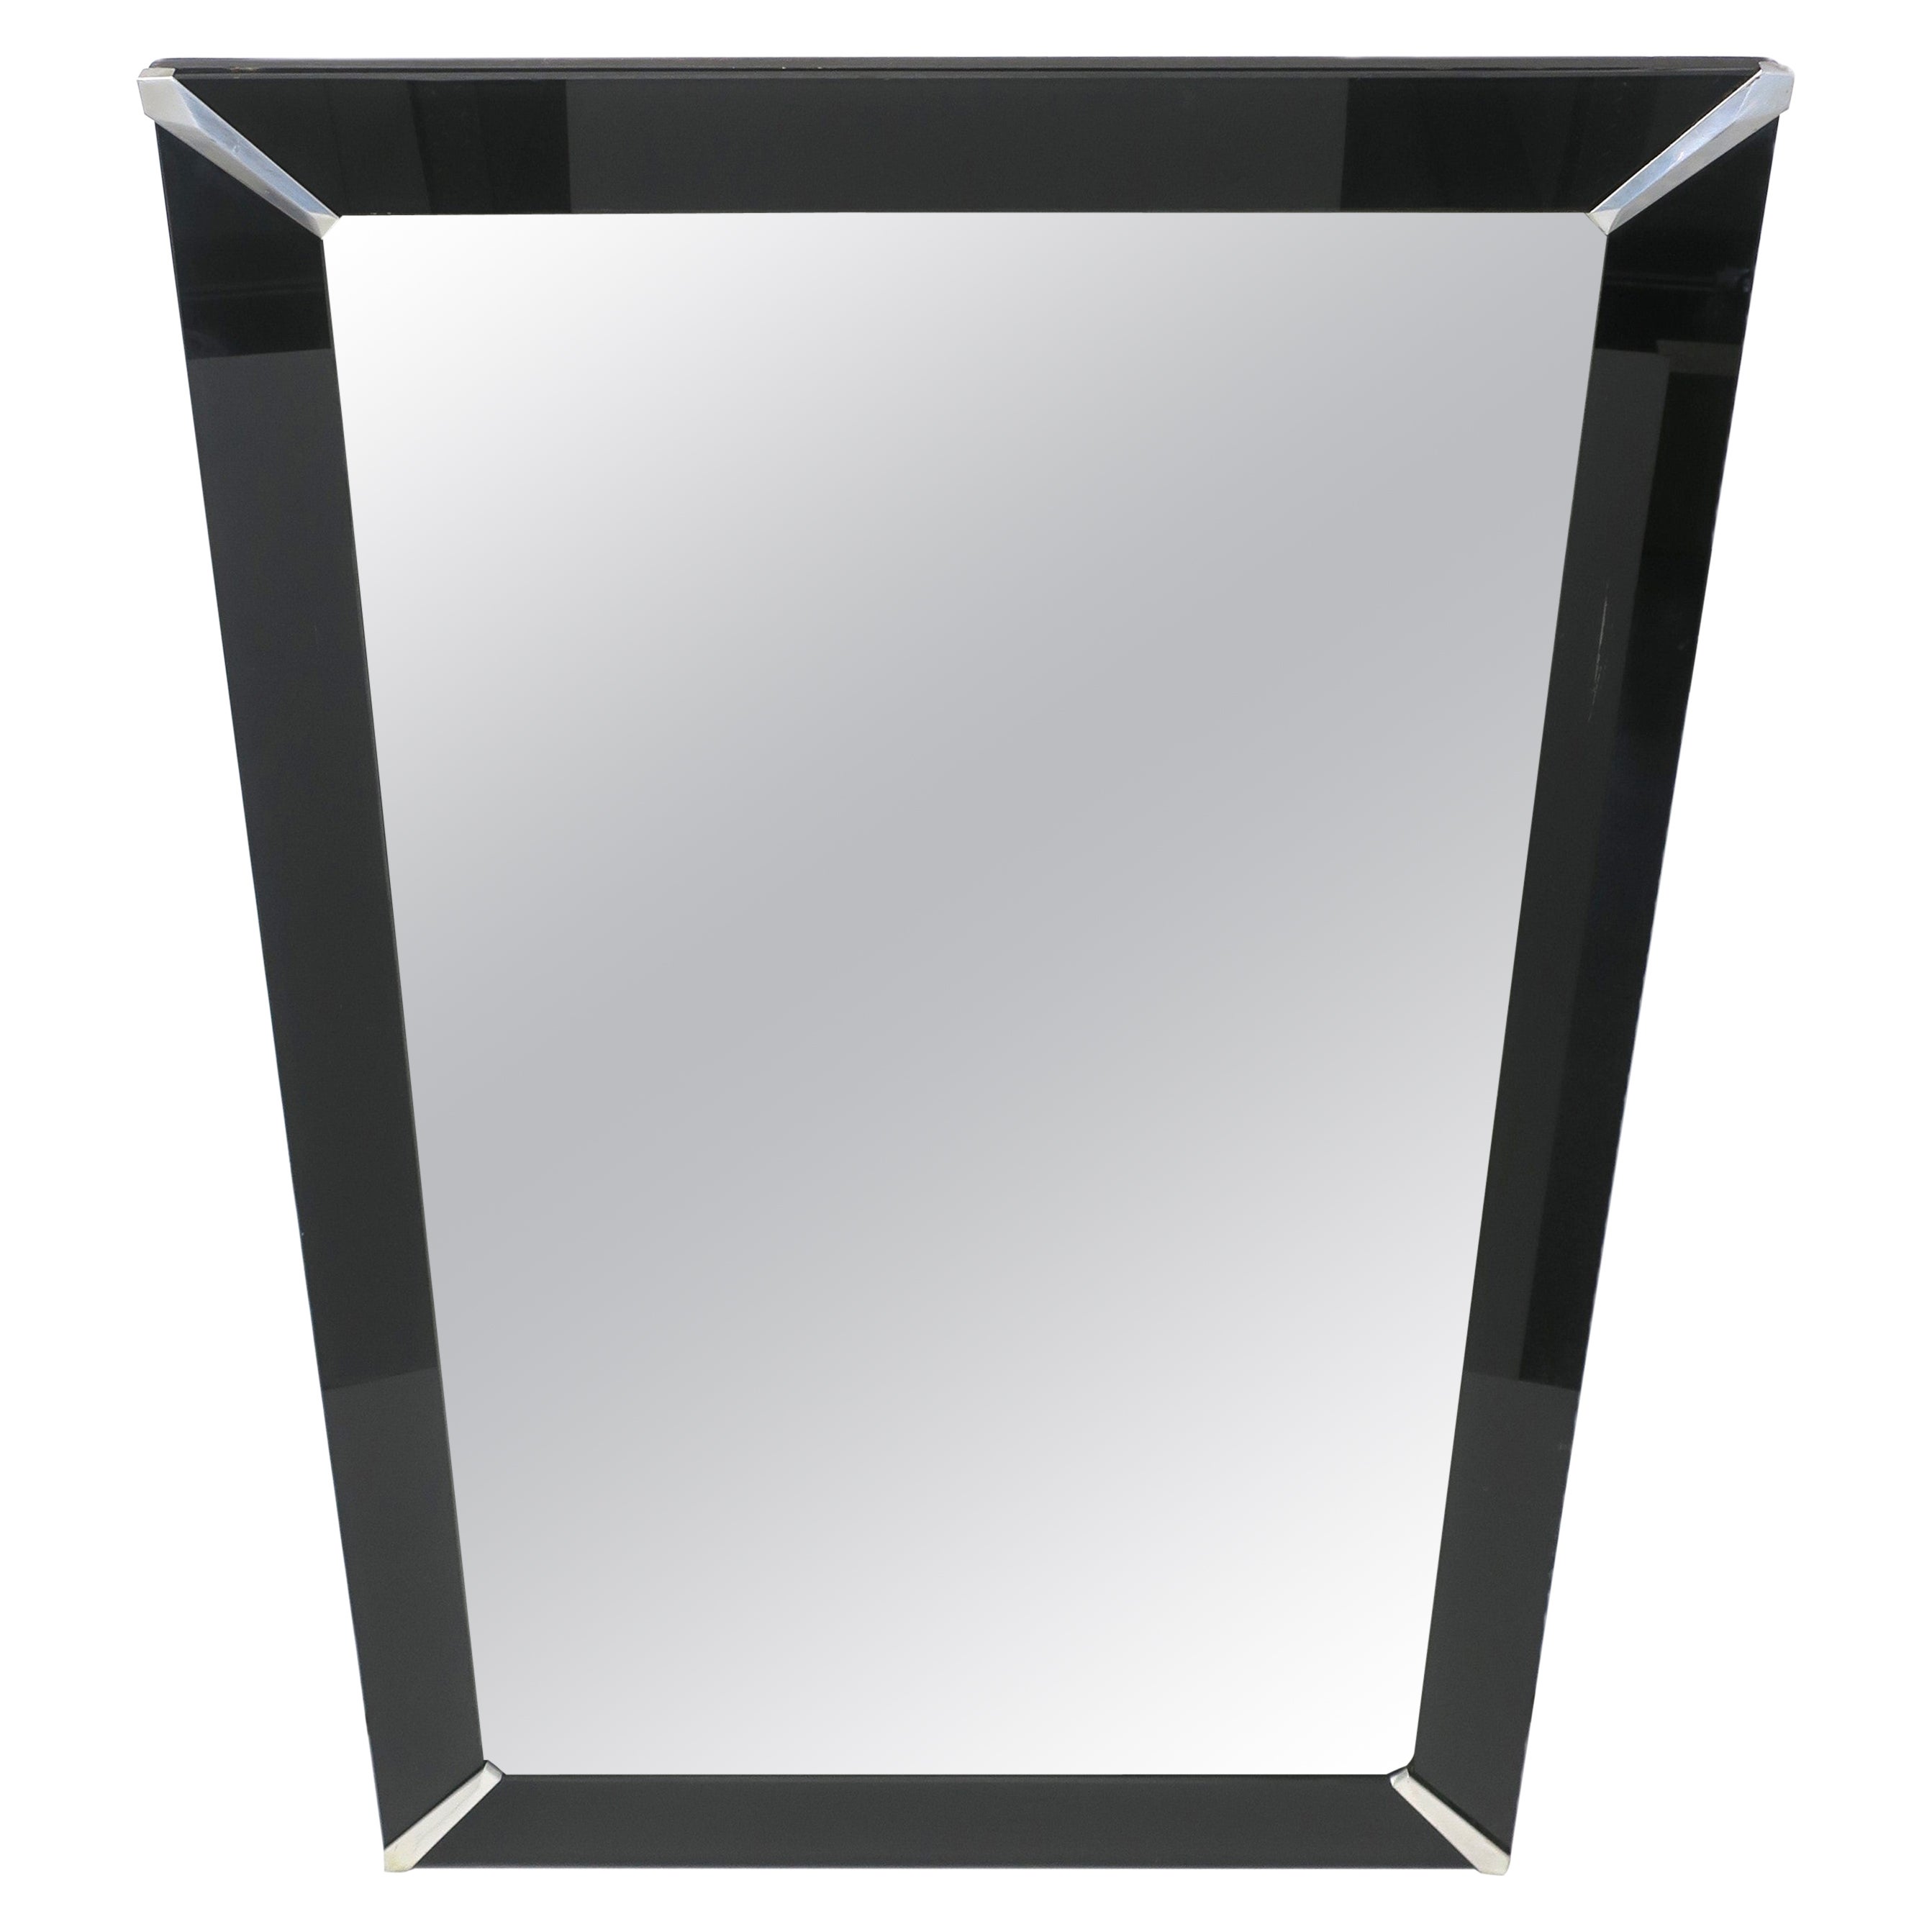 Wall&Deco Mirror avec cadre en verre noir